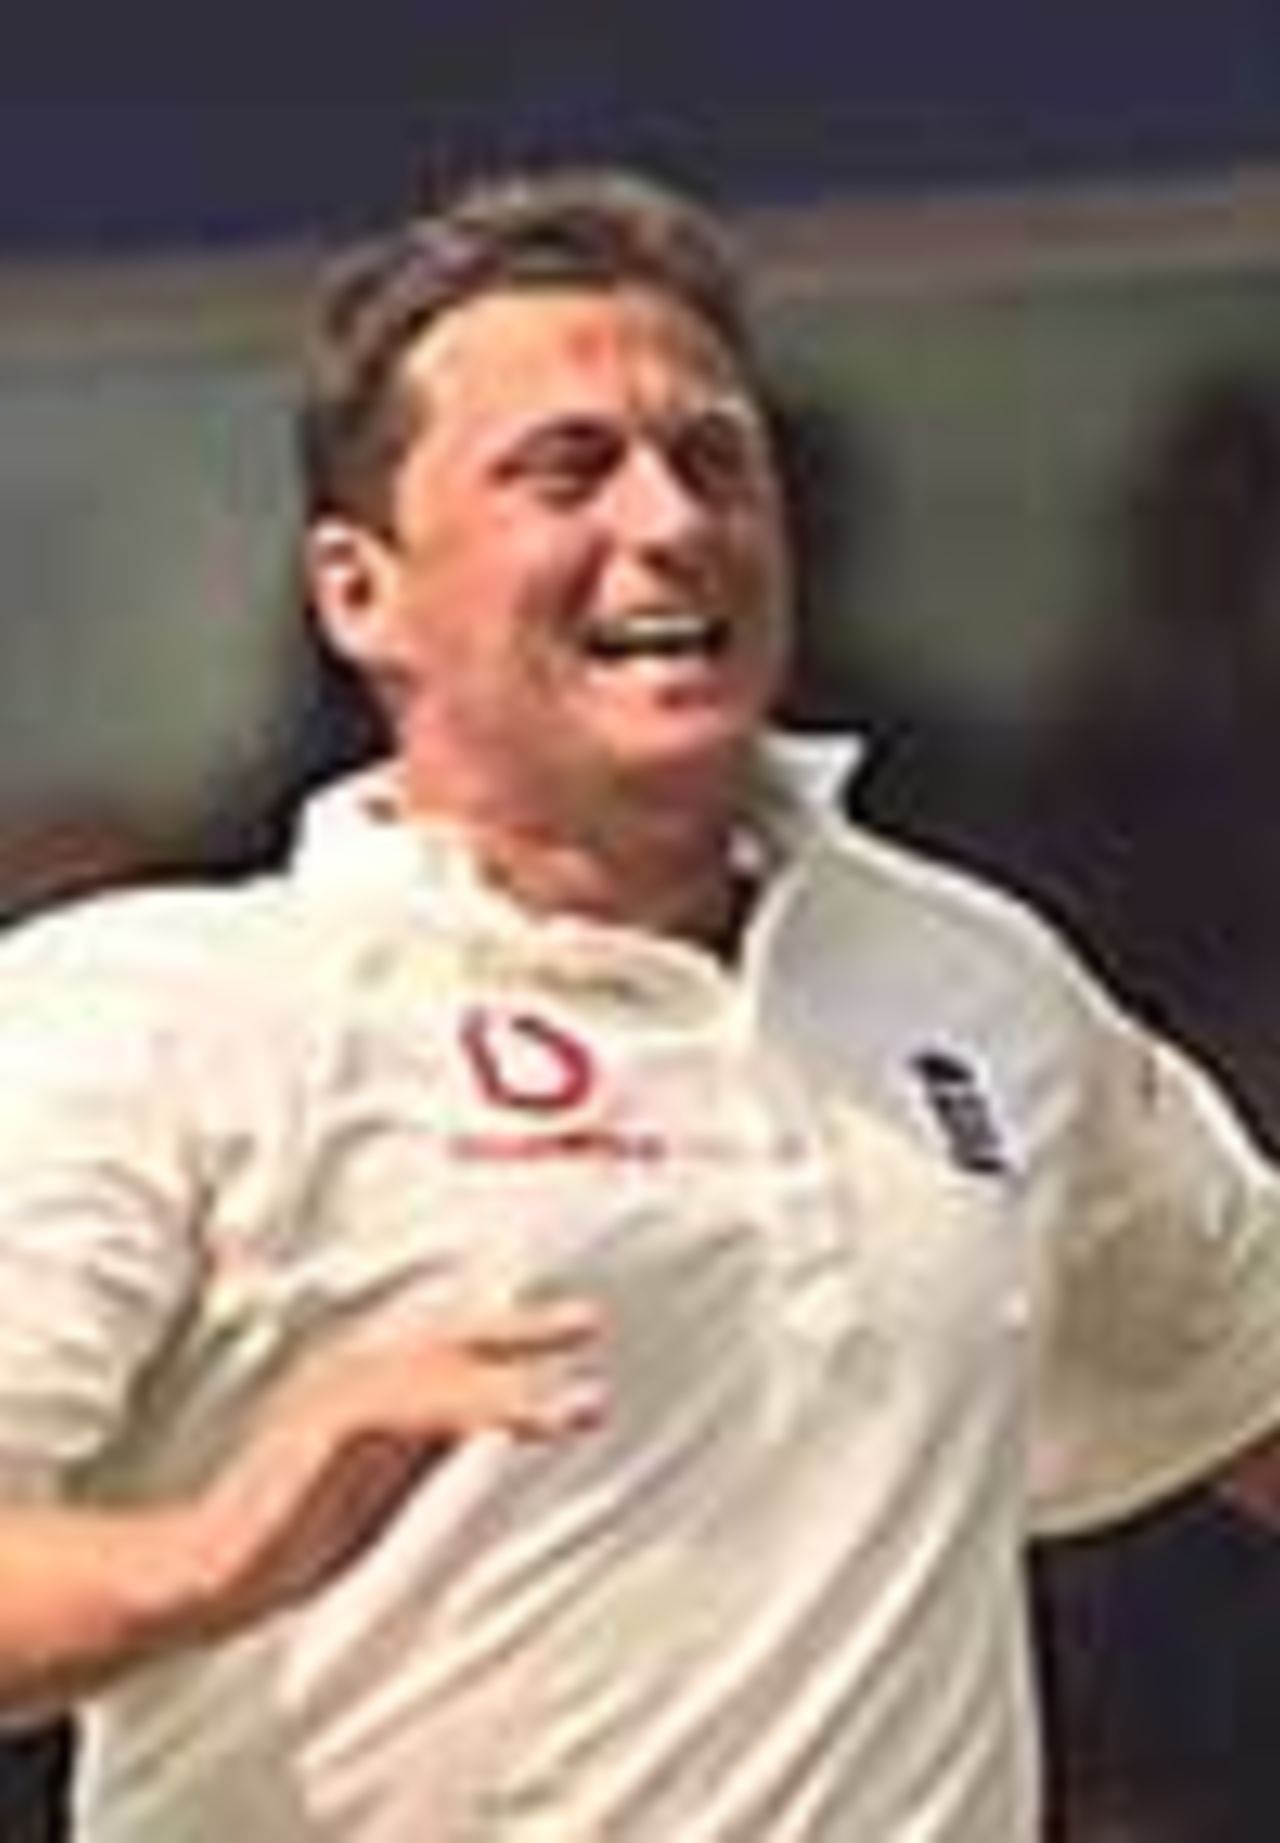 Sri Lanka v England , 2nd Test at Kandy, 7-11 March 2001